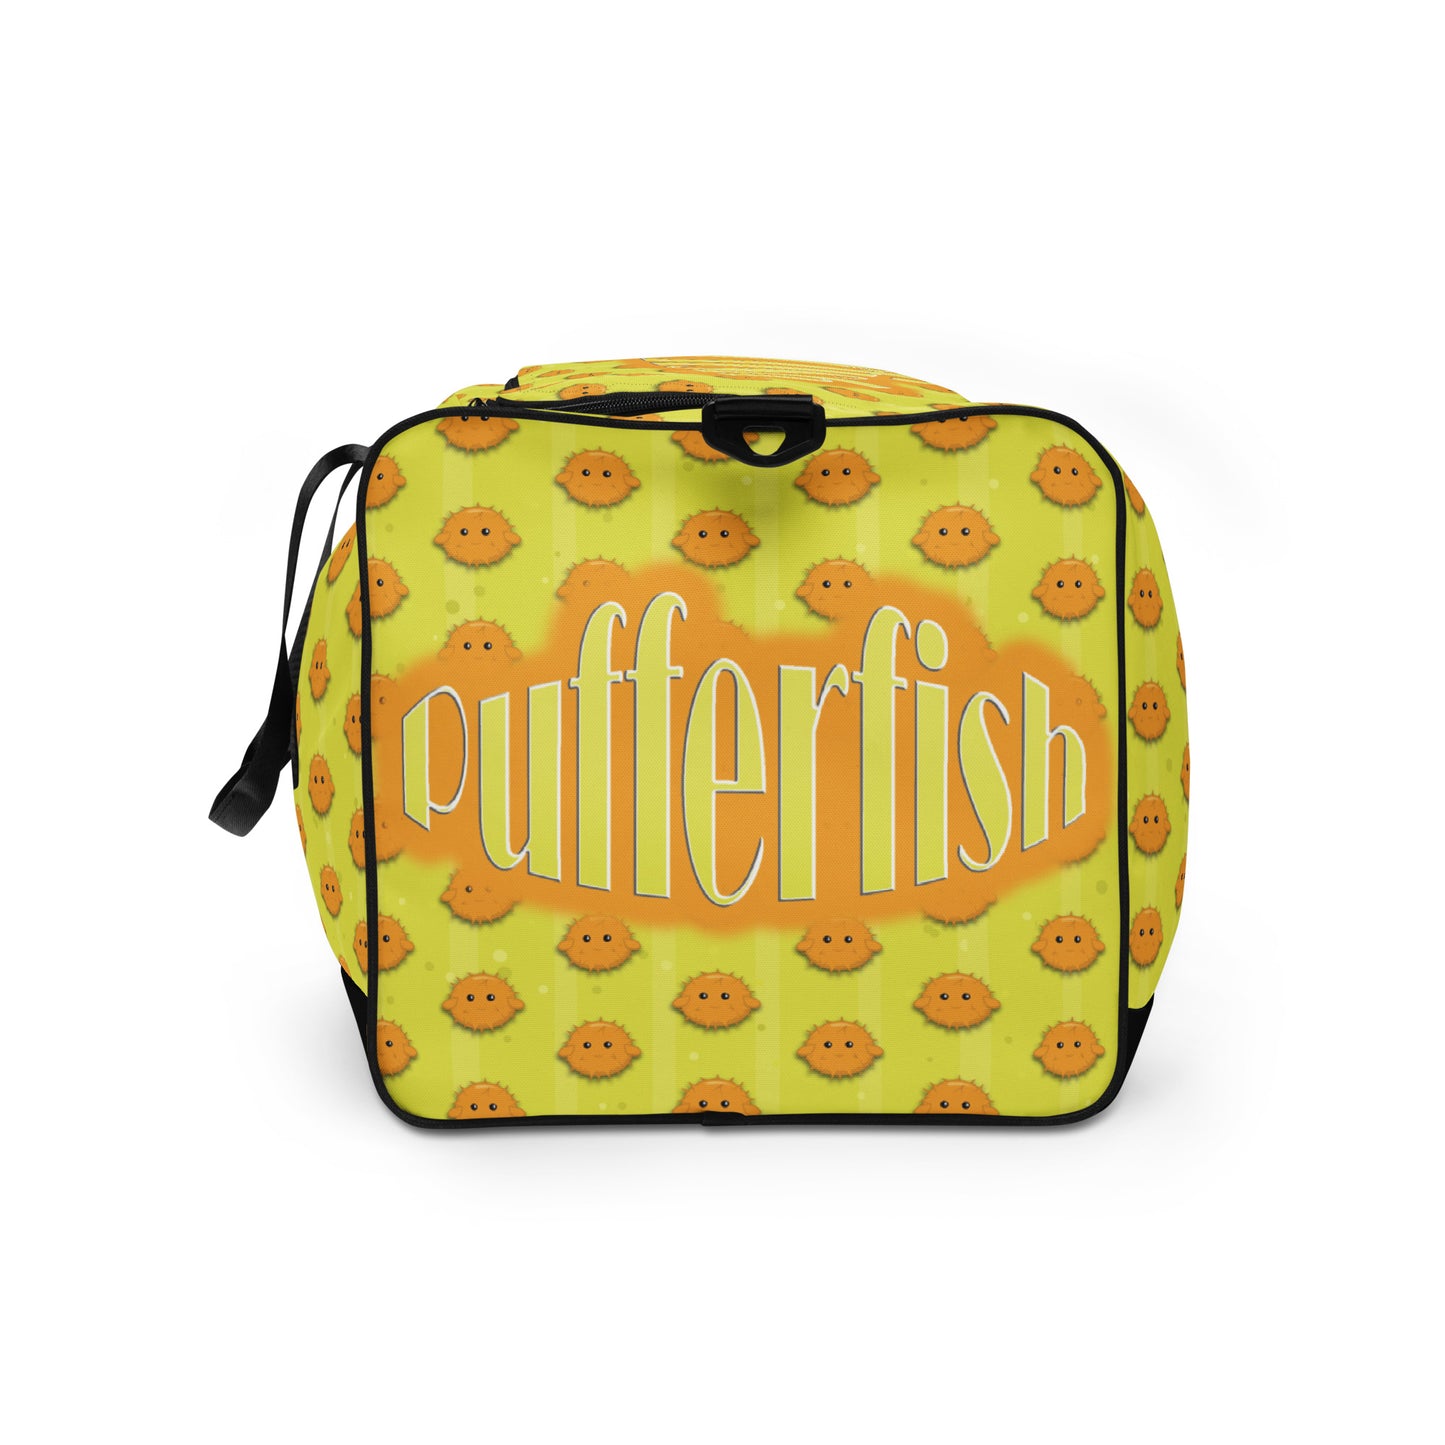 Puffer Fish Duffle bag